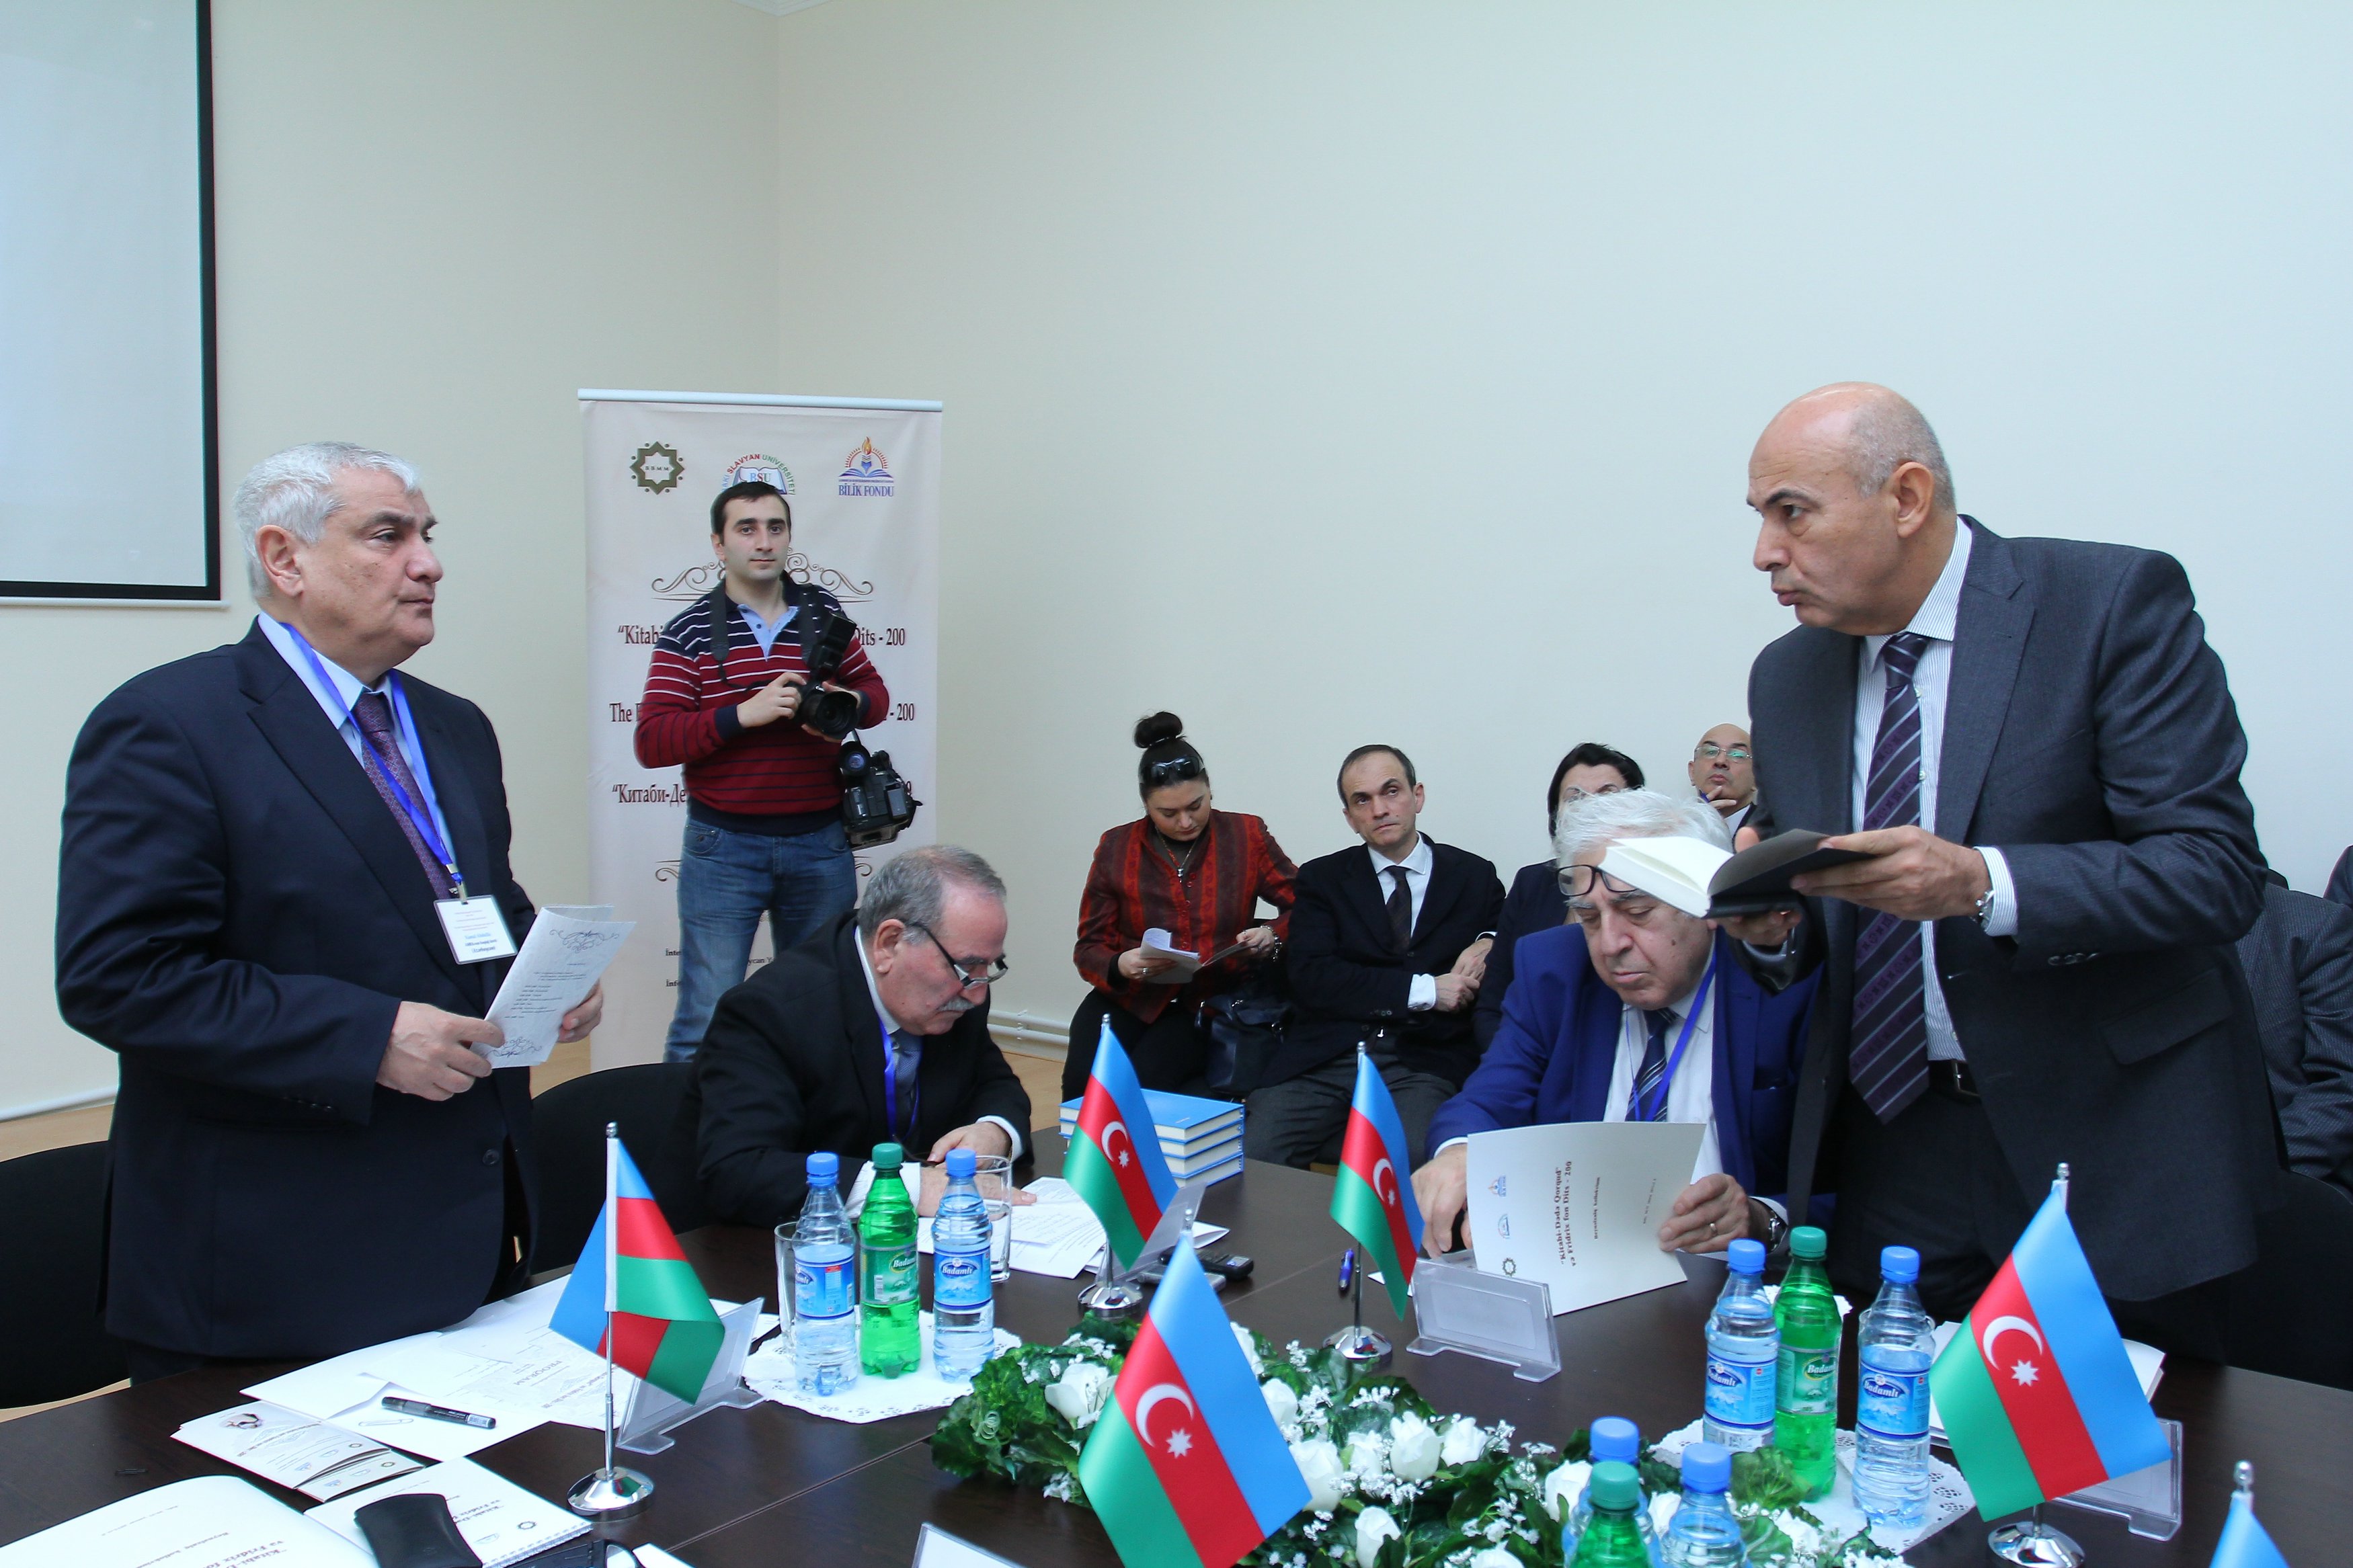 Baku unites researchers of the Book of Dede Korkut